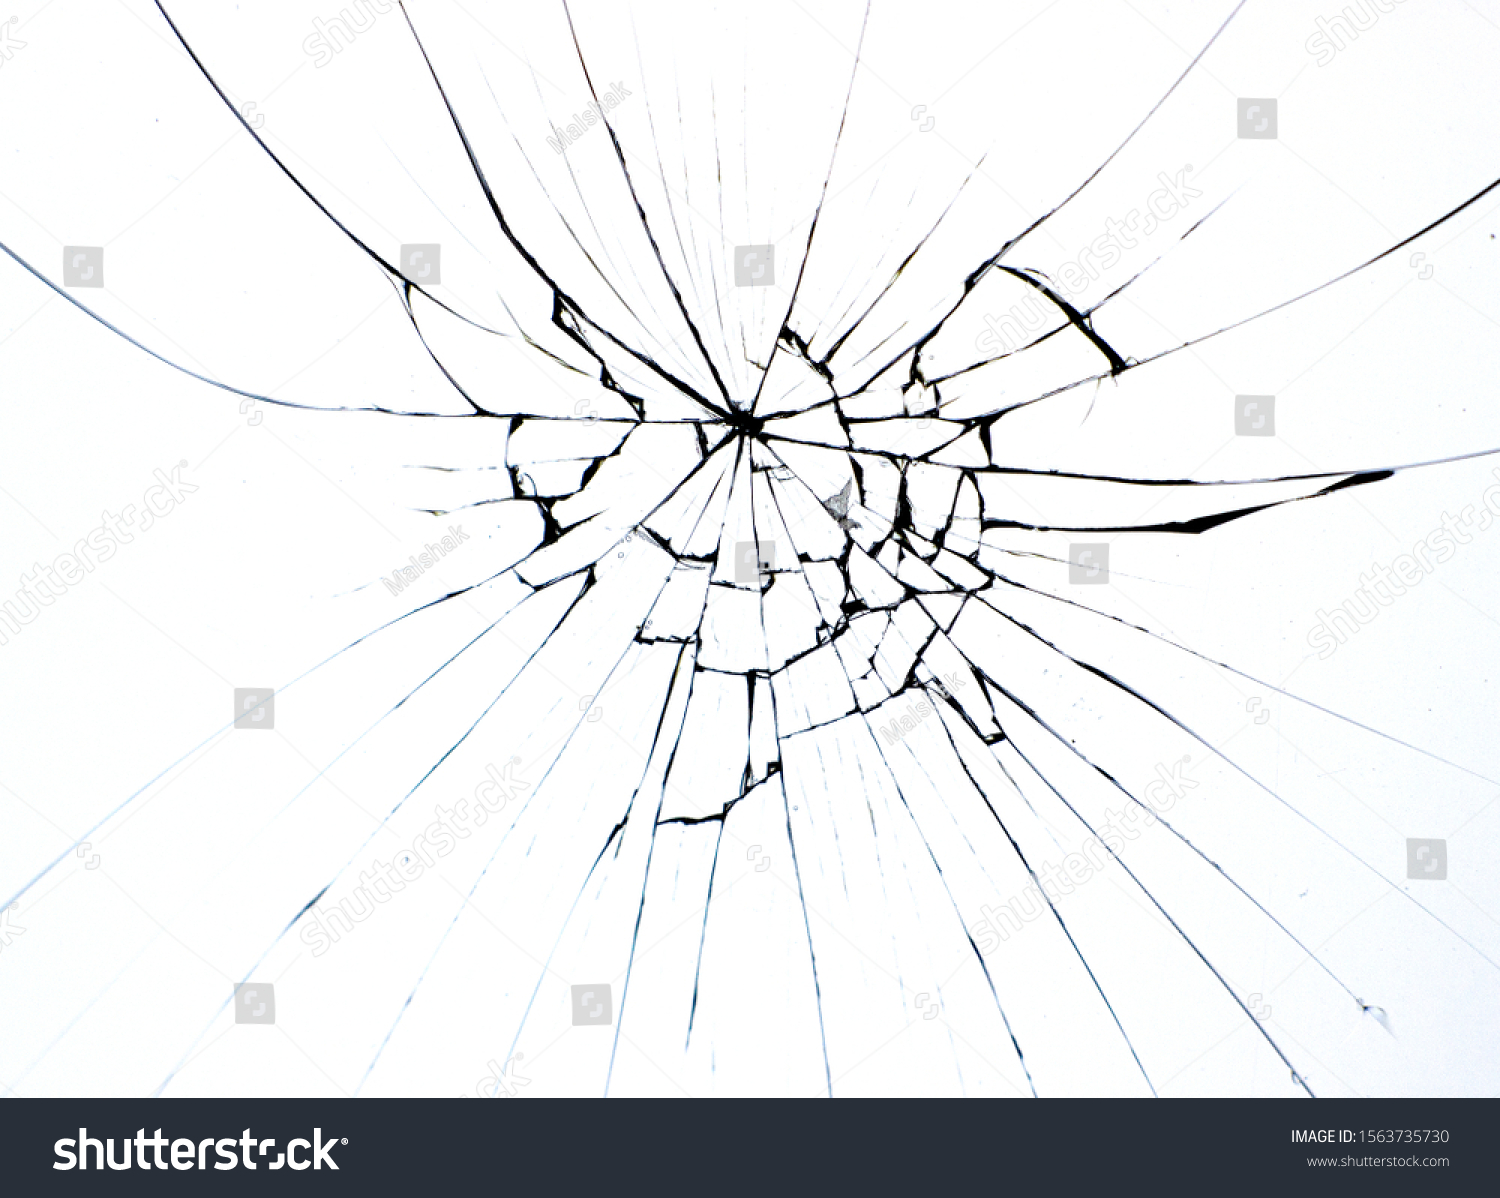 Broken glass on window isolated crack on white background. Cracks concept for design. #1563735730